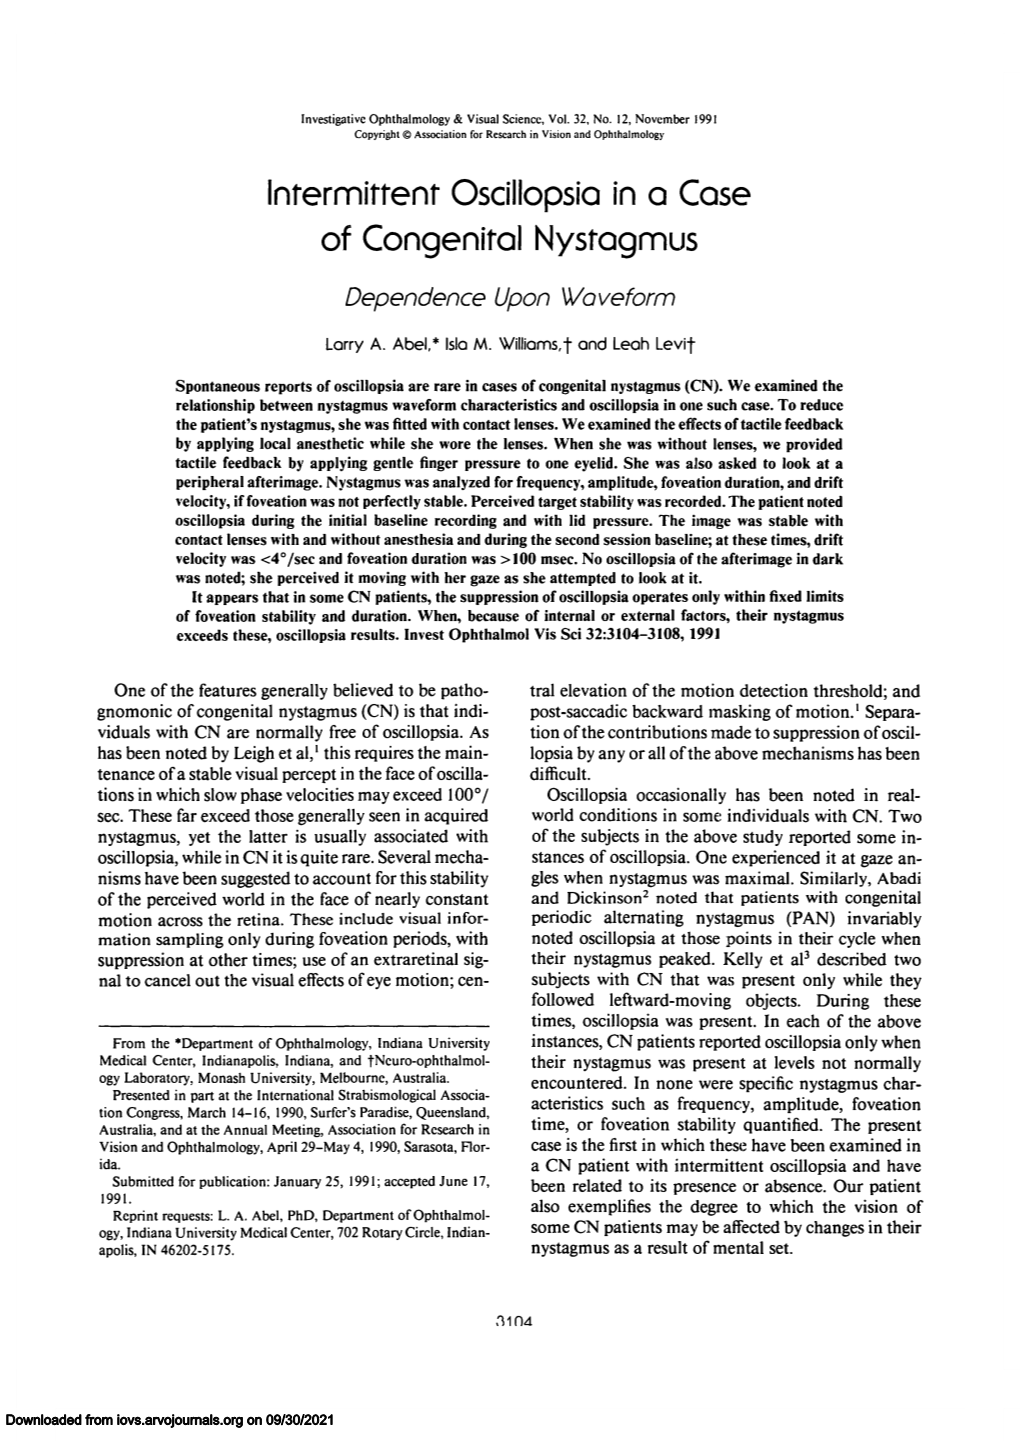 Intermittent Oscillopsia in a Case of Congenital Nystagmus